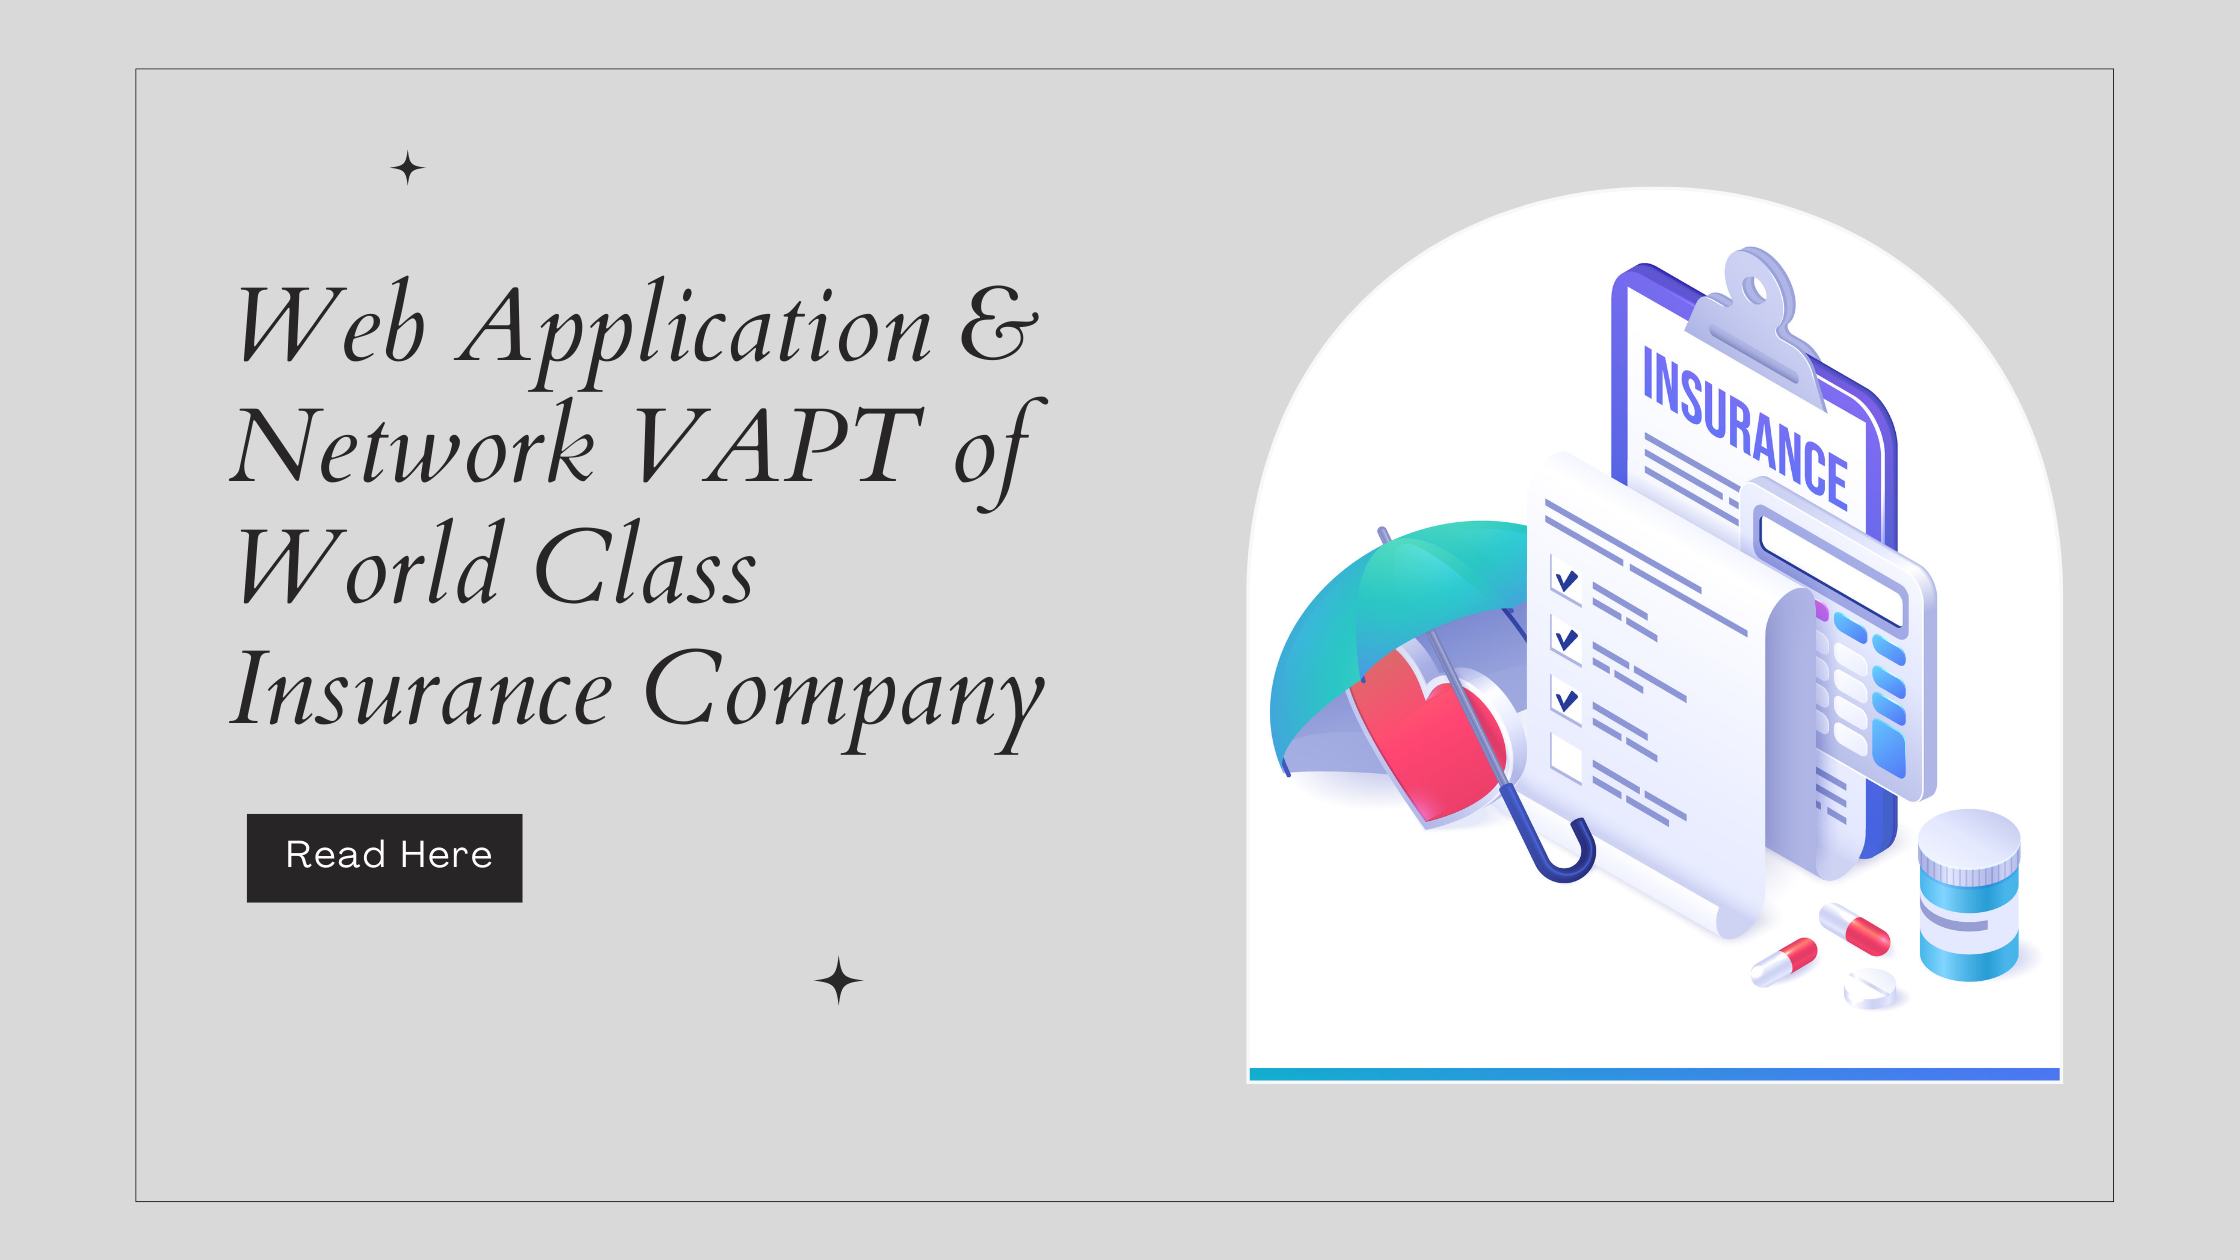 Web Application & Network VAPT of World Class Insurance Company